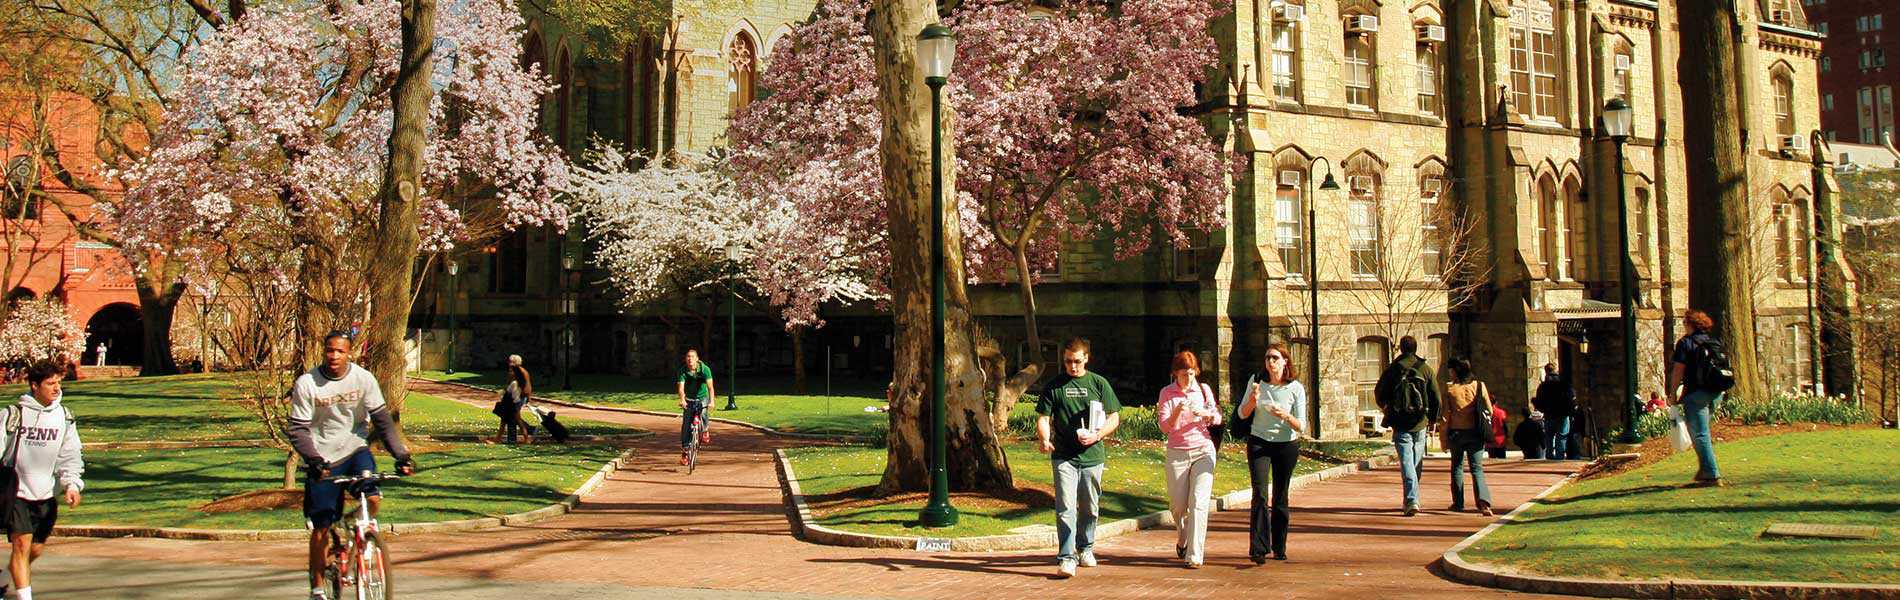 University of Pennsylvania Campus